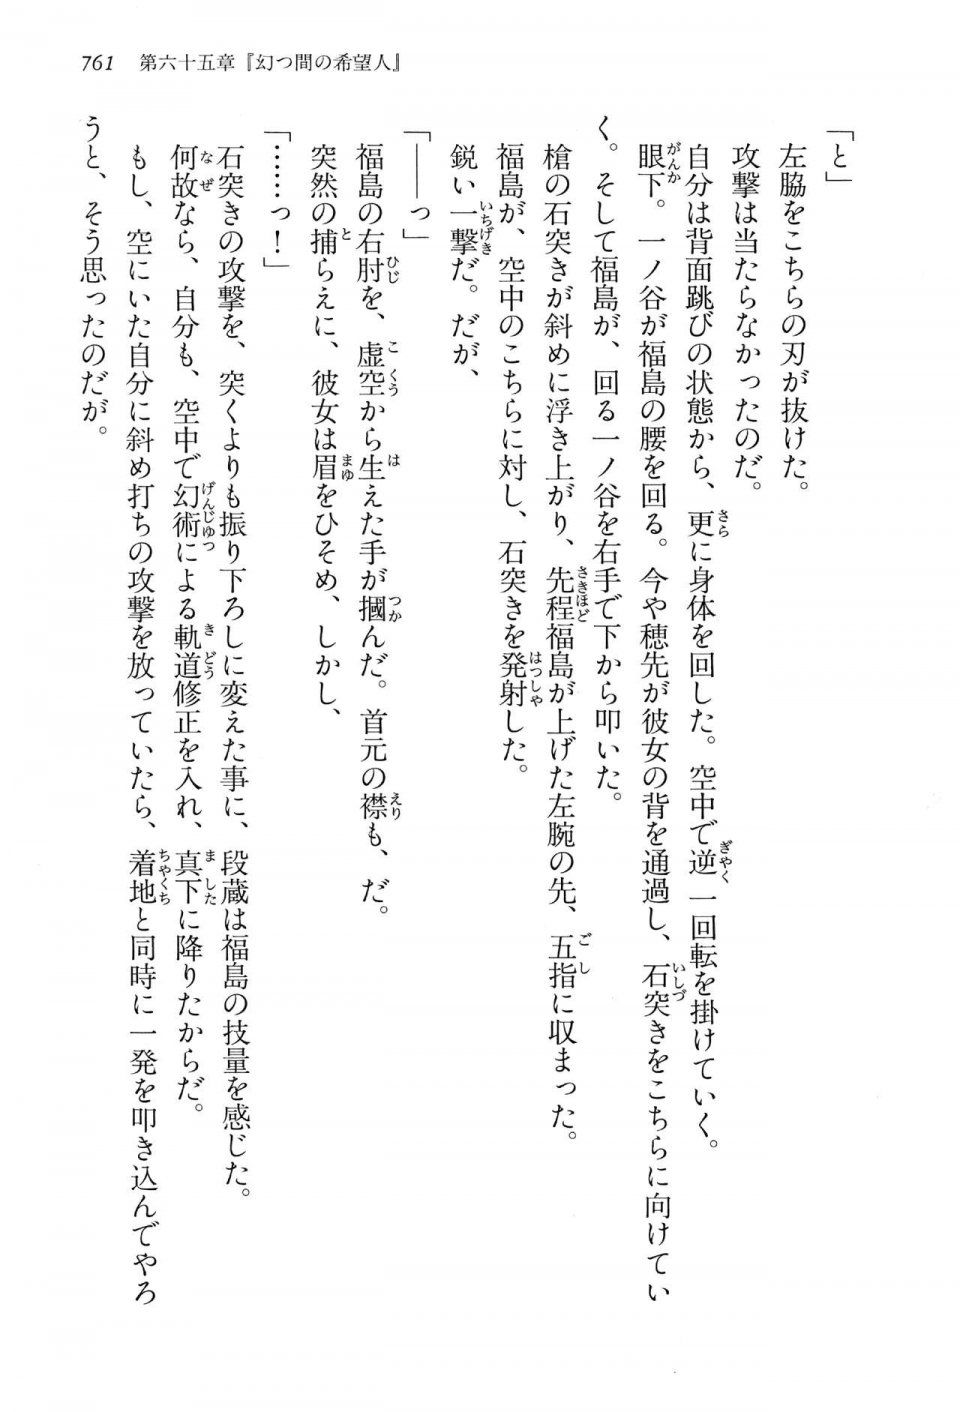 Kyoukai Senjou no Horizon LN Vol 15(6C) Part 2 - Photo #231